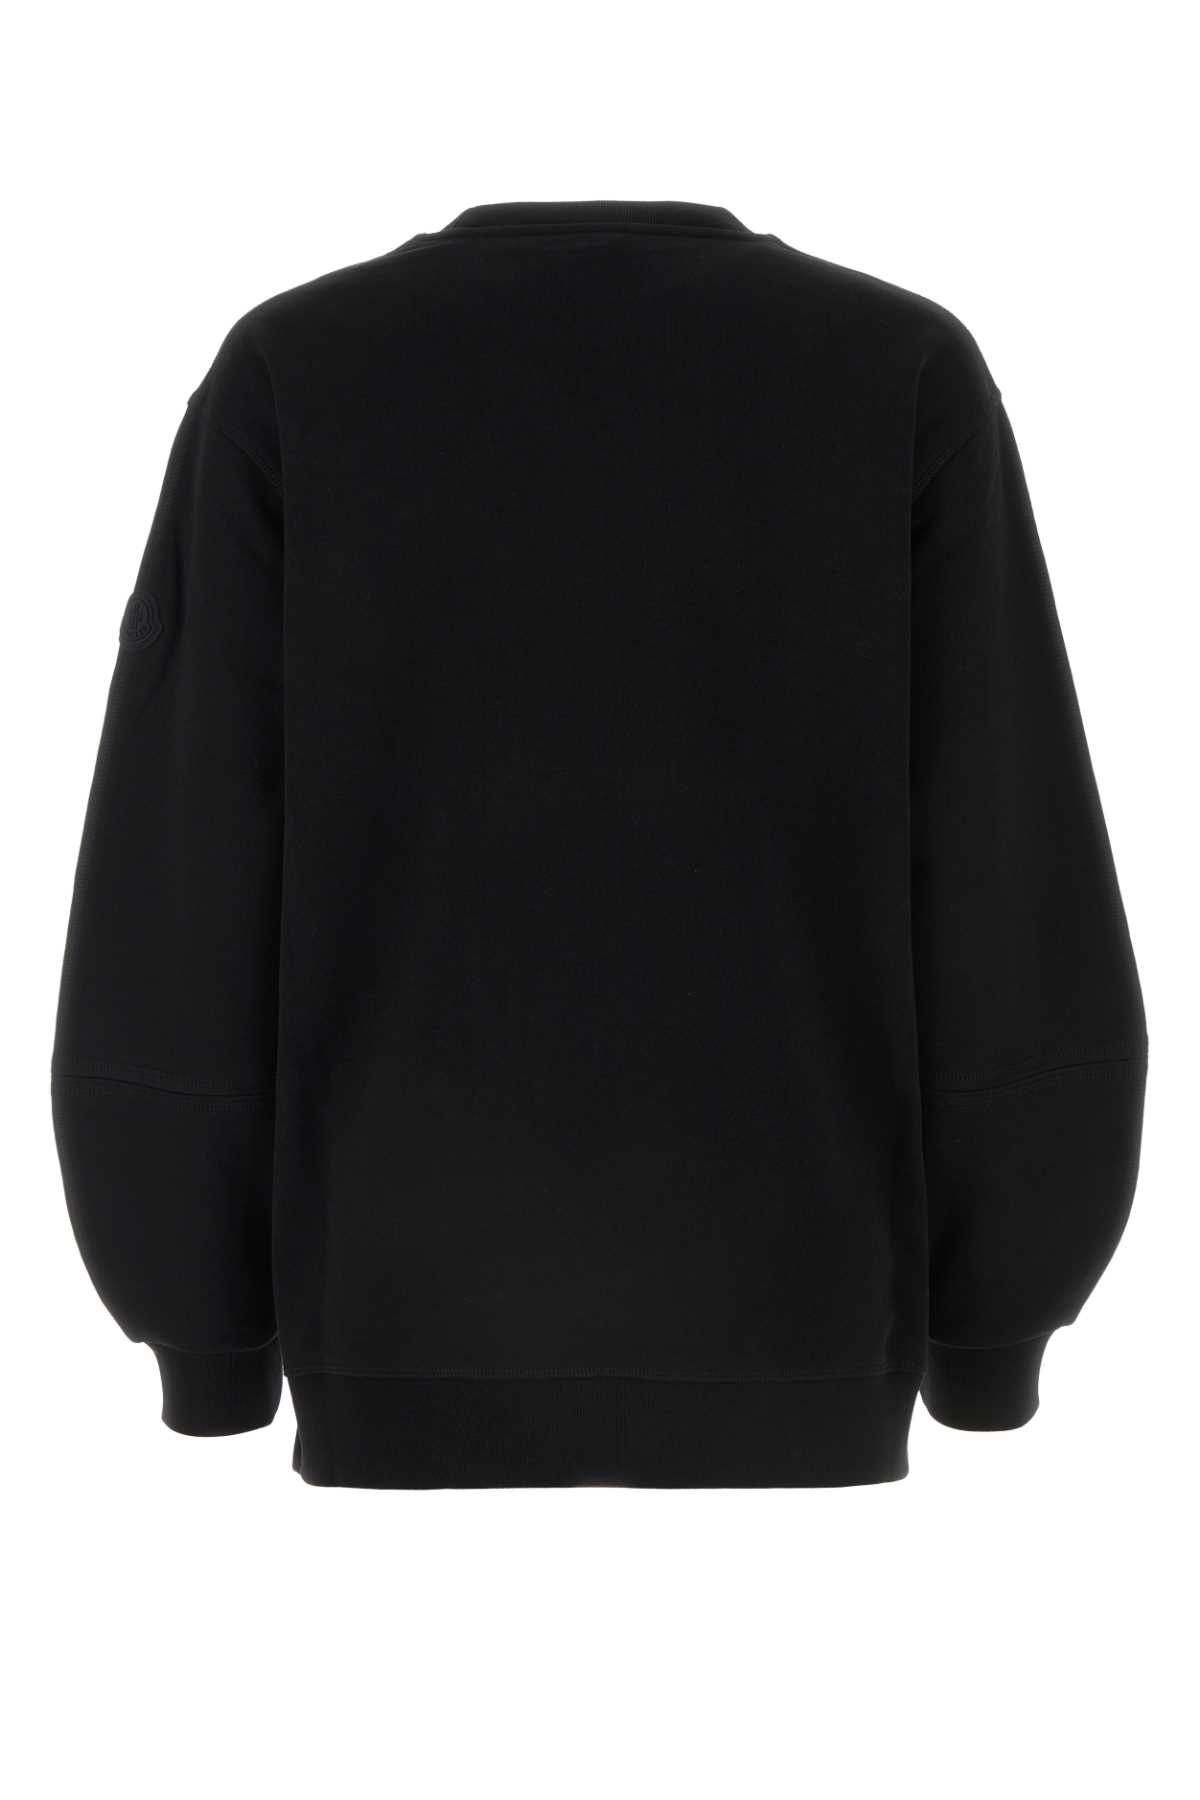 Moncler Black Cotton Oversize Sweatshirt In 999